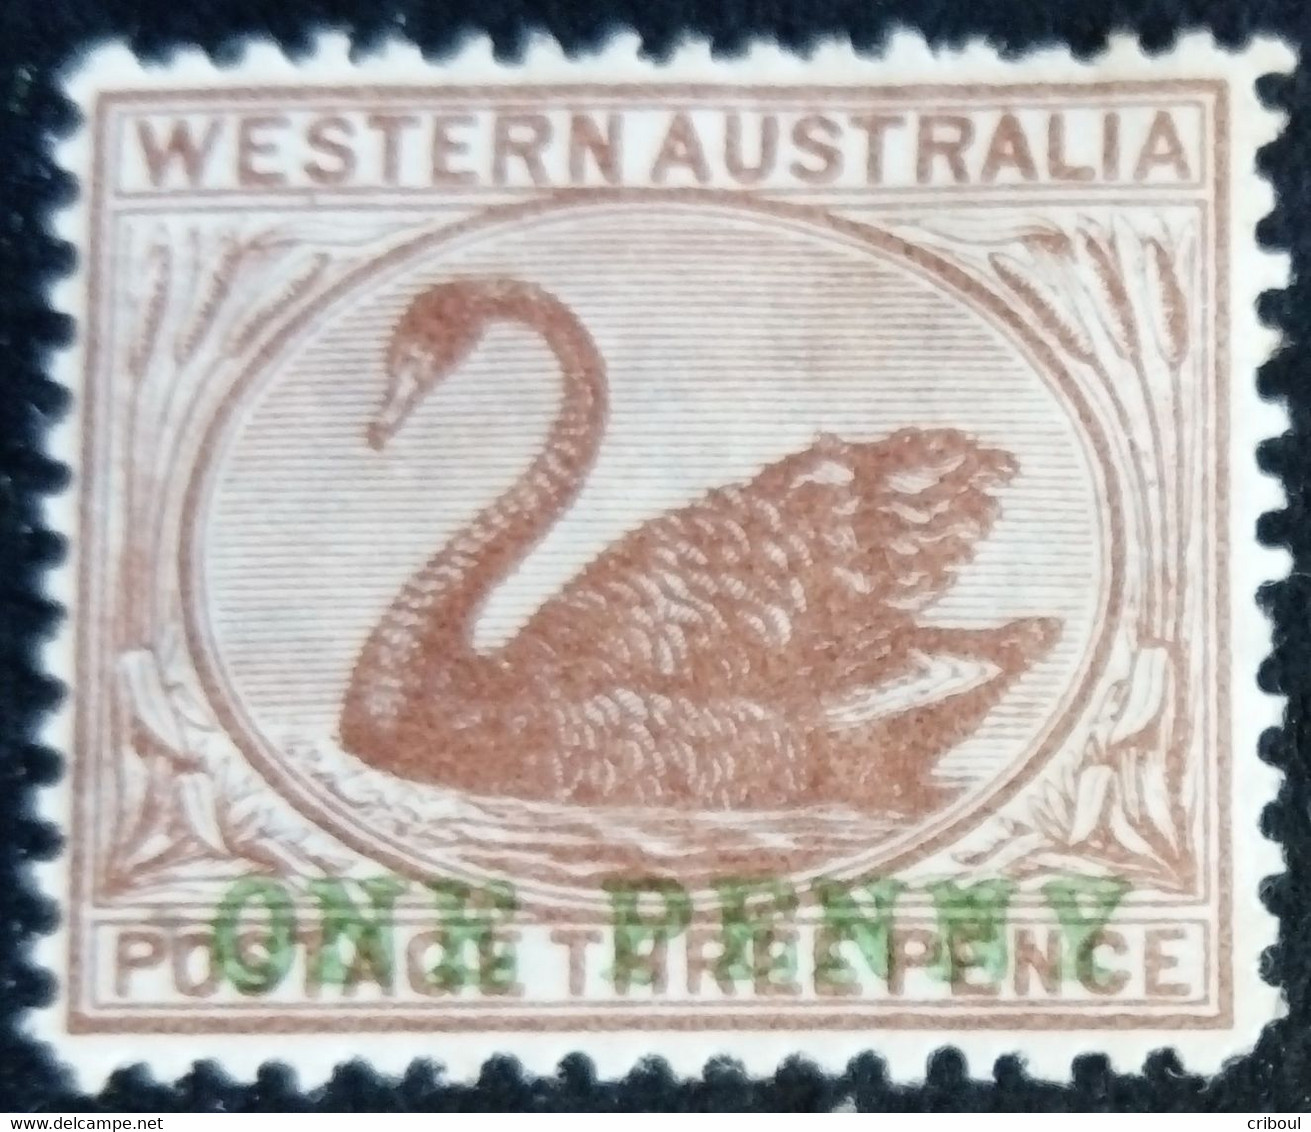 Australie Occidentale Western Australia 1893 Filigrane Couronne CC Watermark Crown CC Surchargé ONE PENNY Yvert 51 * MH - Cygnes